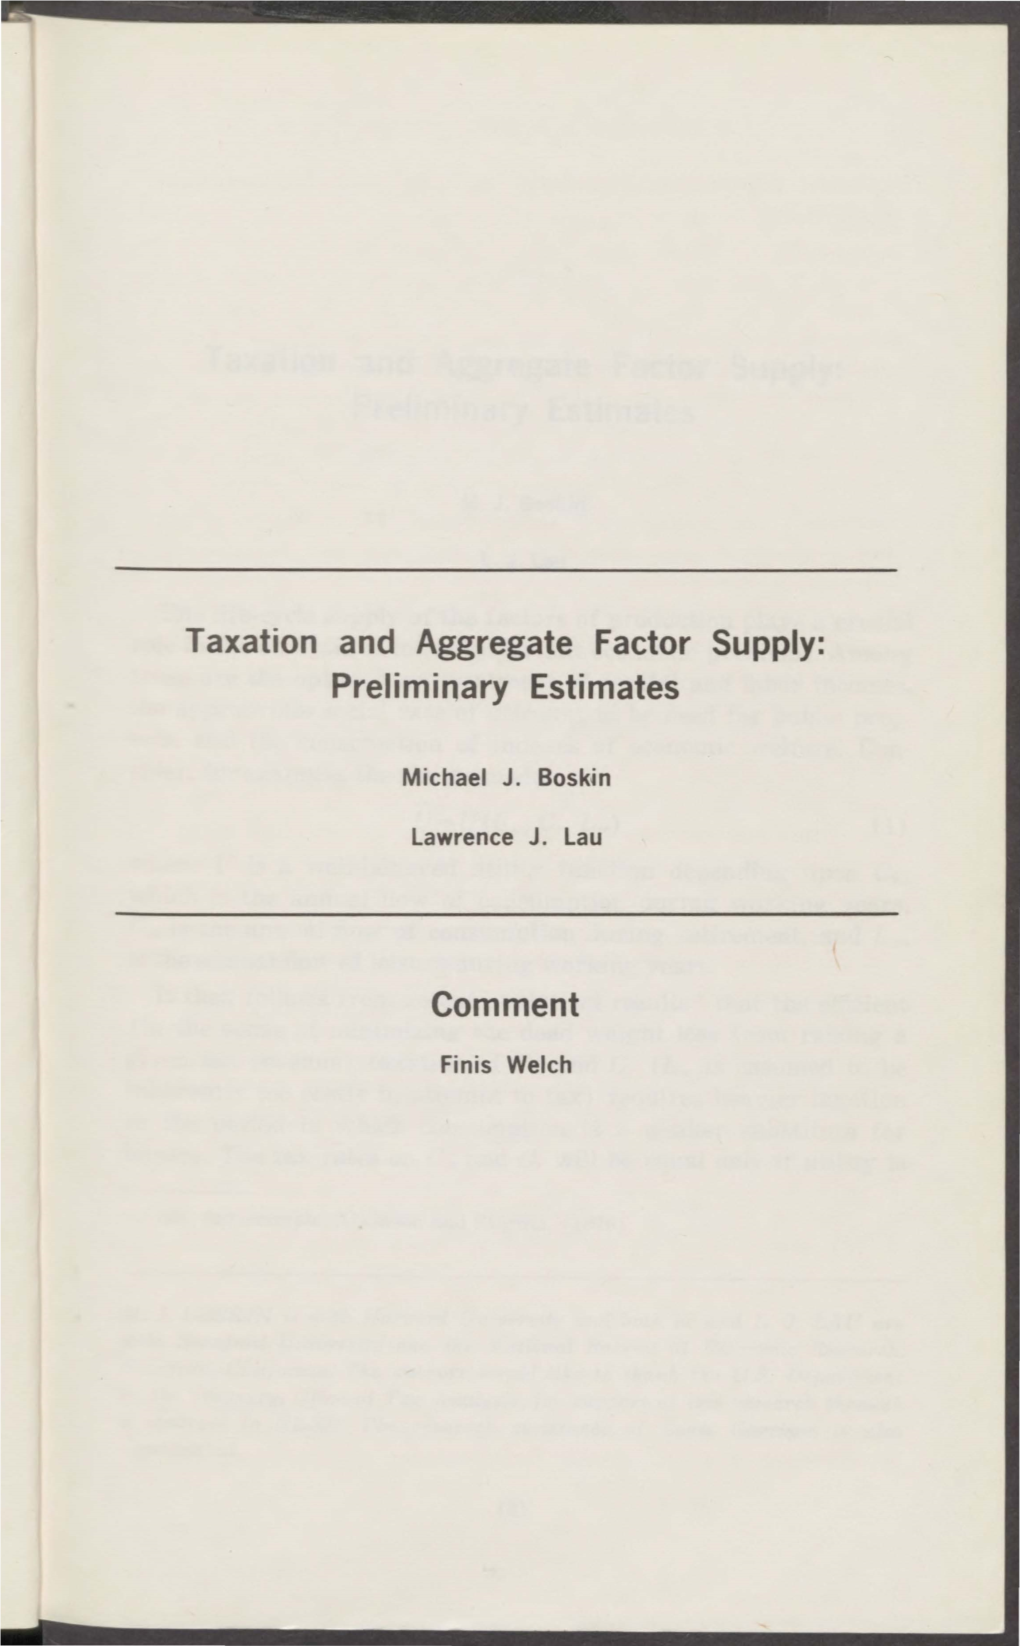 1978 Compendium of Tax Research